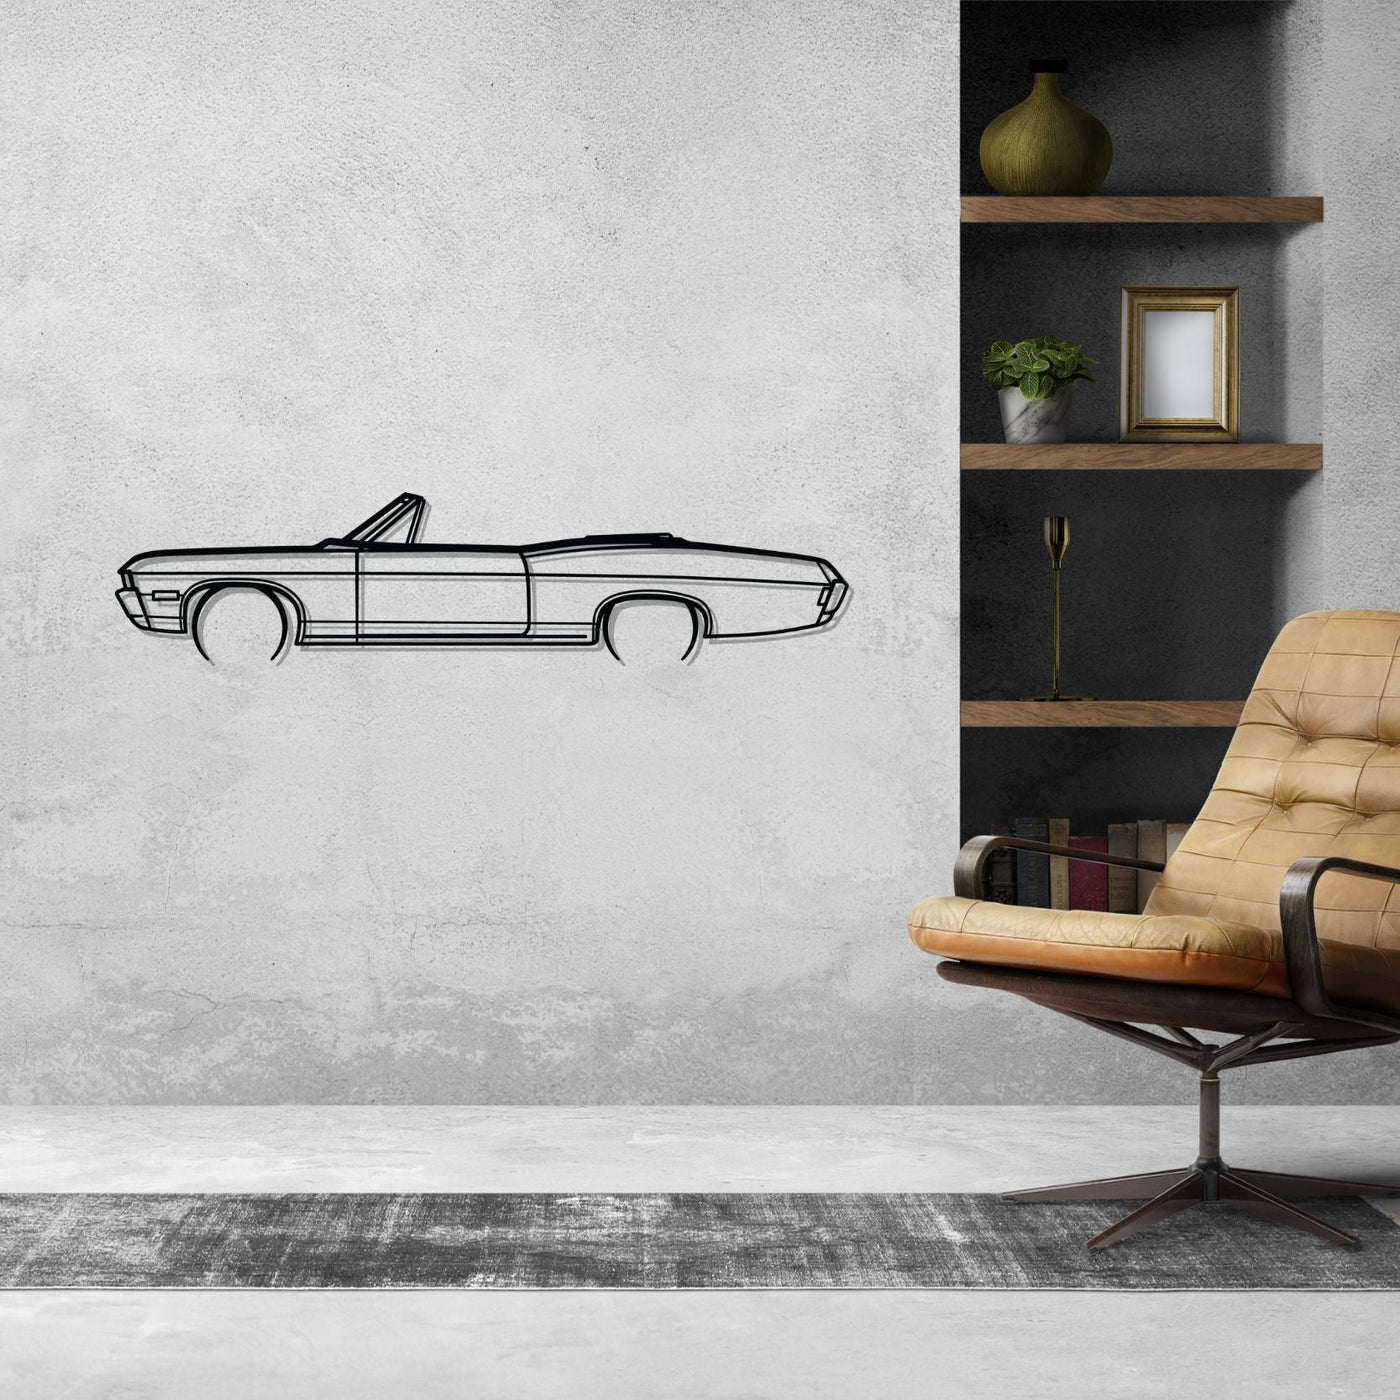 Impala 307 convertible Detailed Silhouette Metal Wall Art